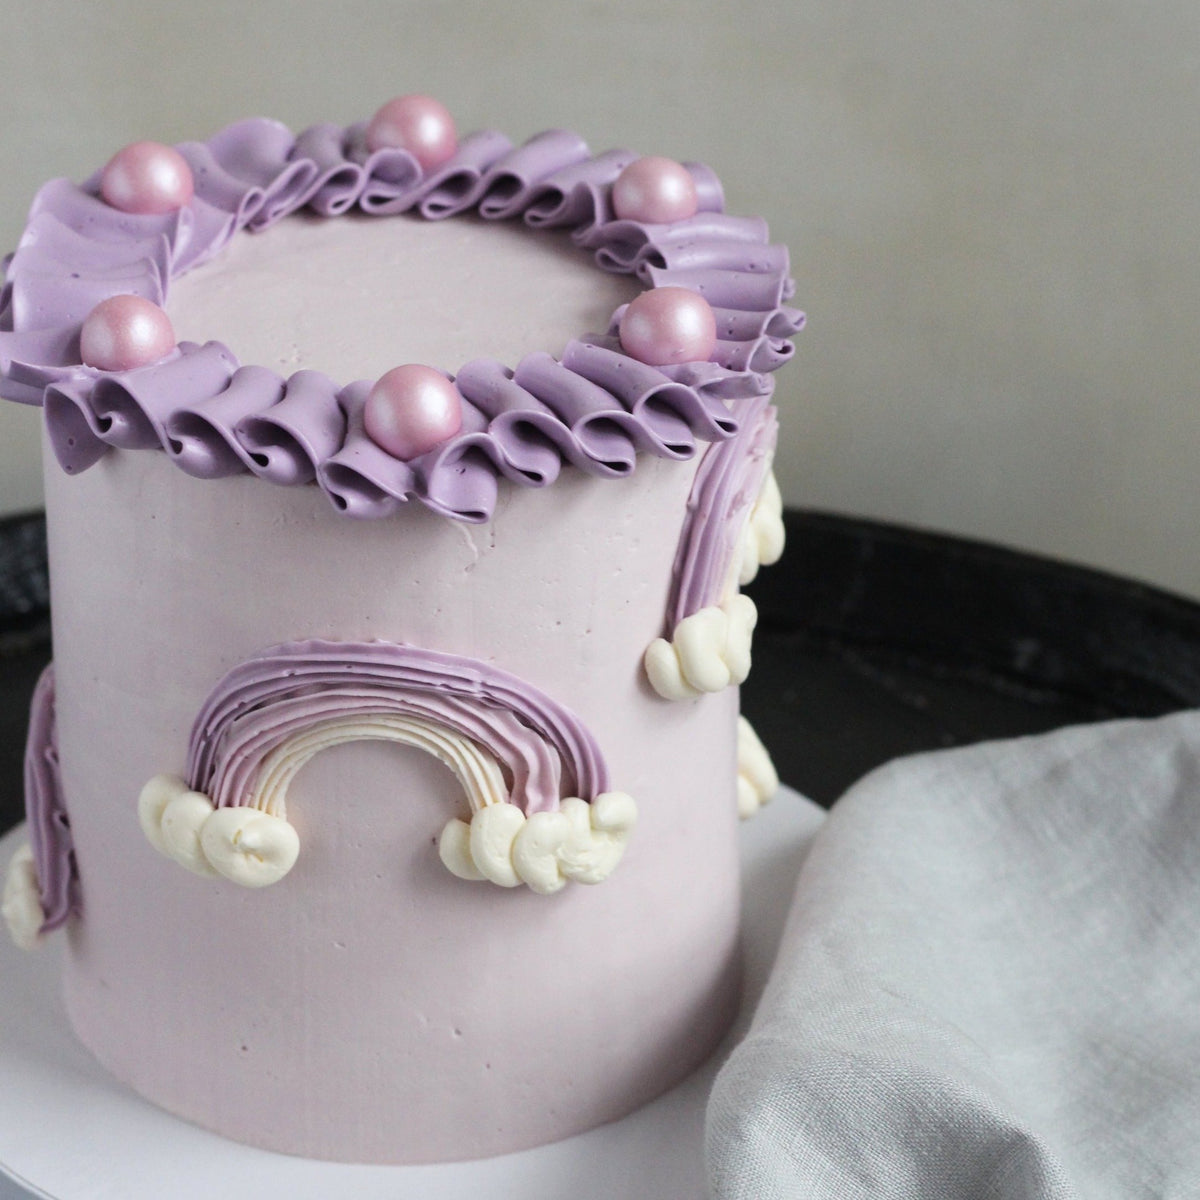 Our Rainbow Cake with custom purple tones, 3D rainbows and creamy ruffles!